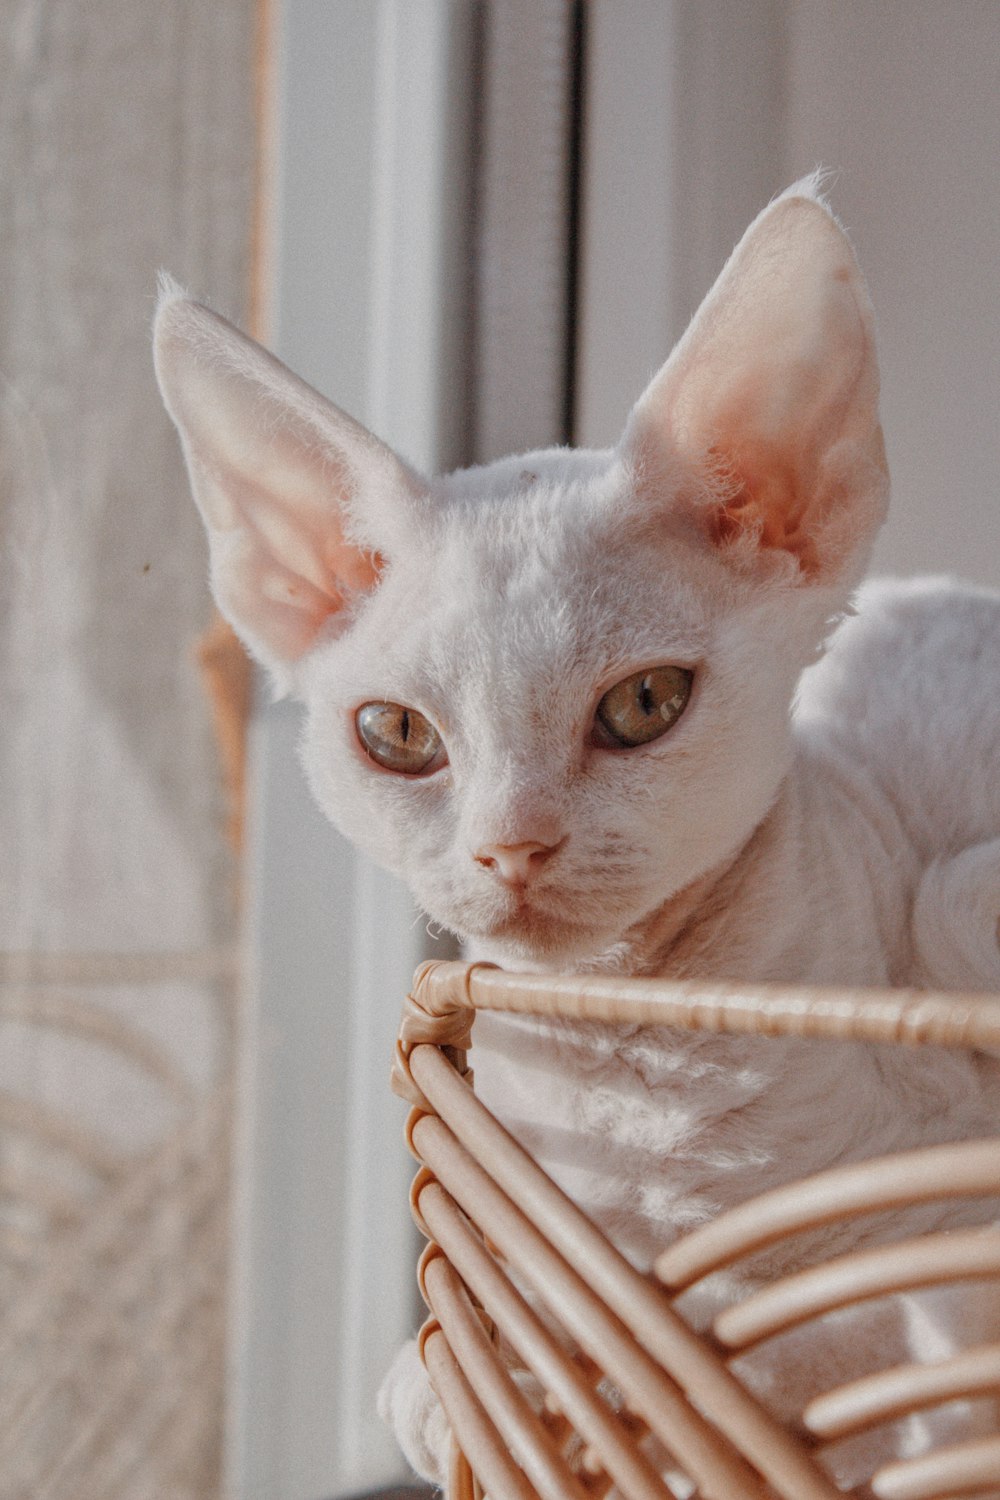 a white cat sitting in a wicker basket